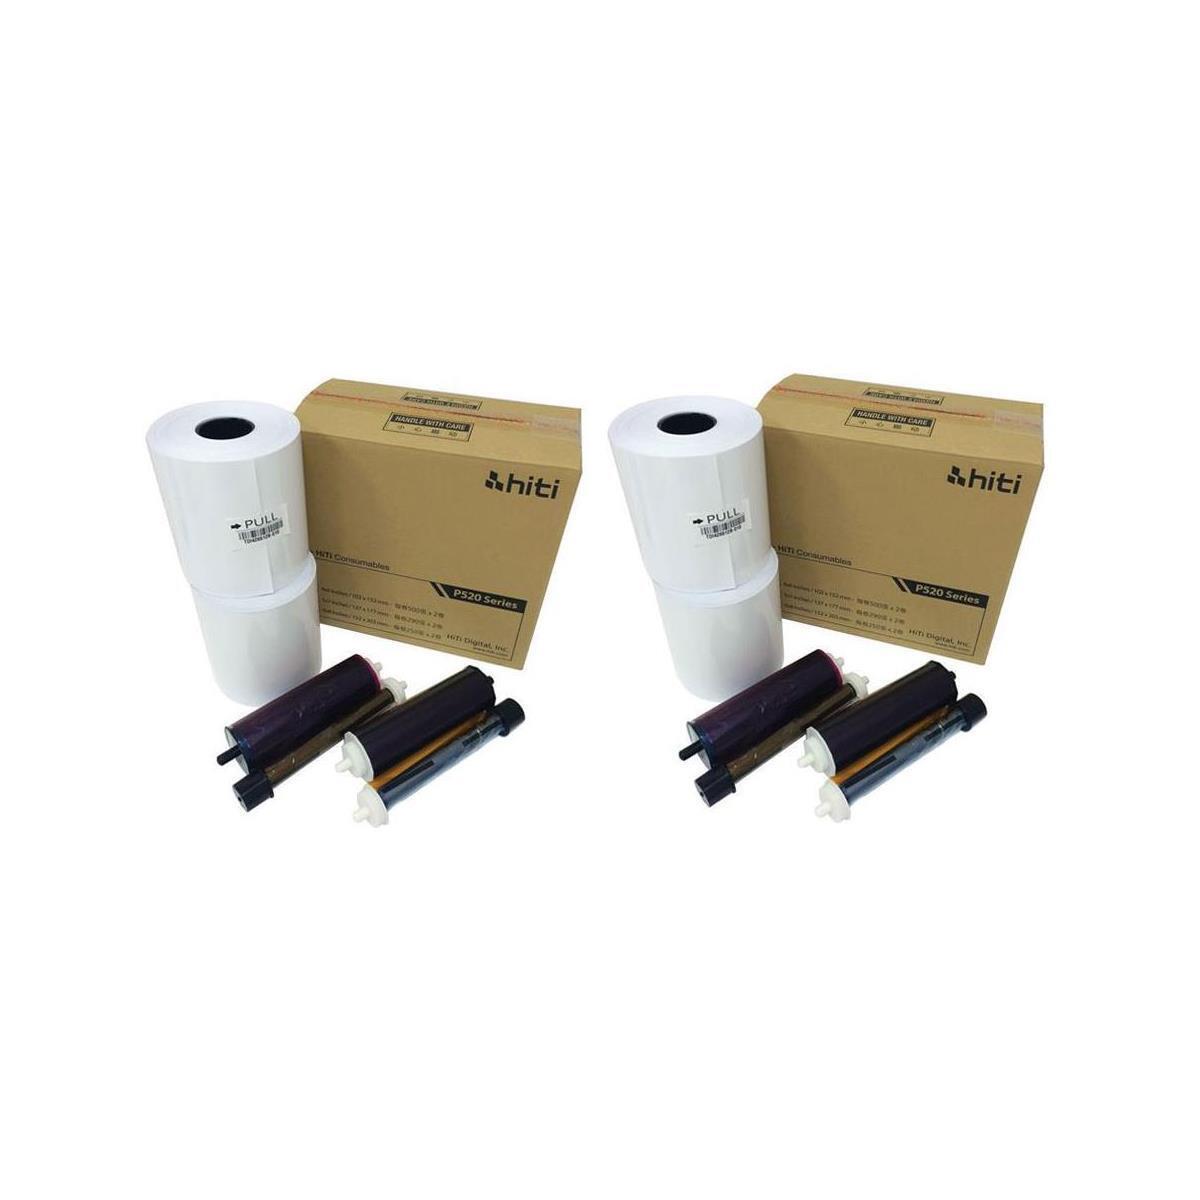 HiTi 4x6 Media for Photo Printer P520  P520L - 2 Pack (4 Rolls  4 Ribbons)